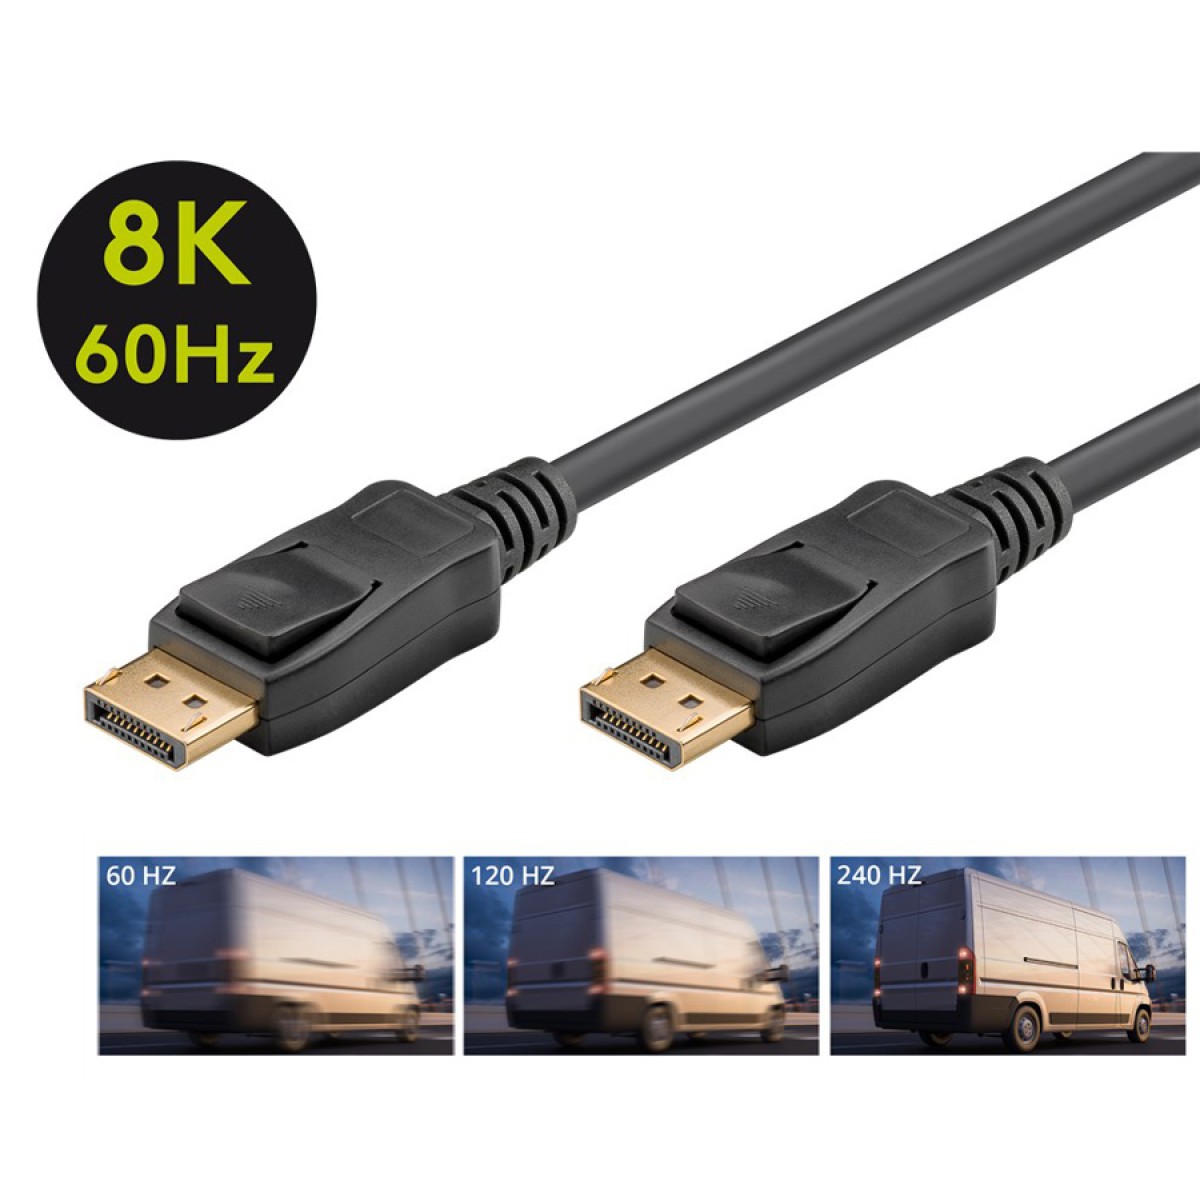 GOOBAY καλώδιο DisplayPort 65810 Certified, 8K/60Hz 32.4 Gbps, 3m, μαύρο